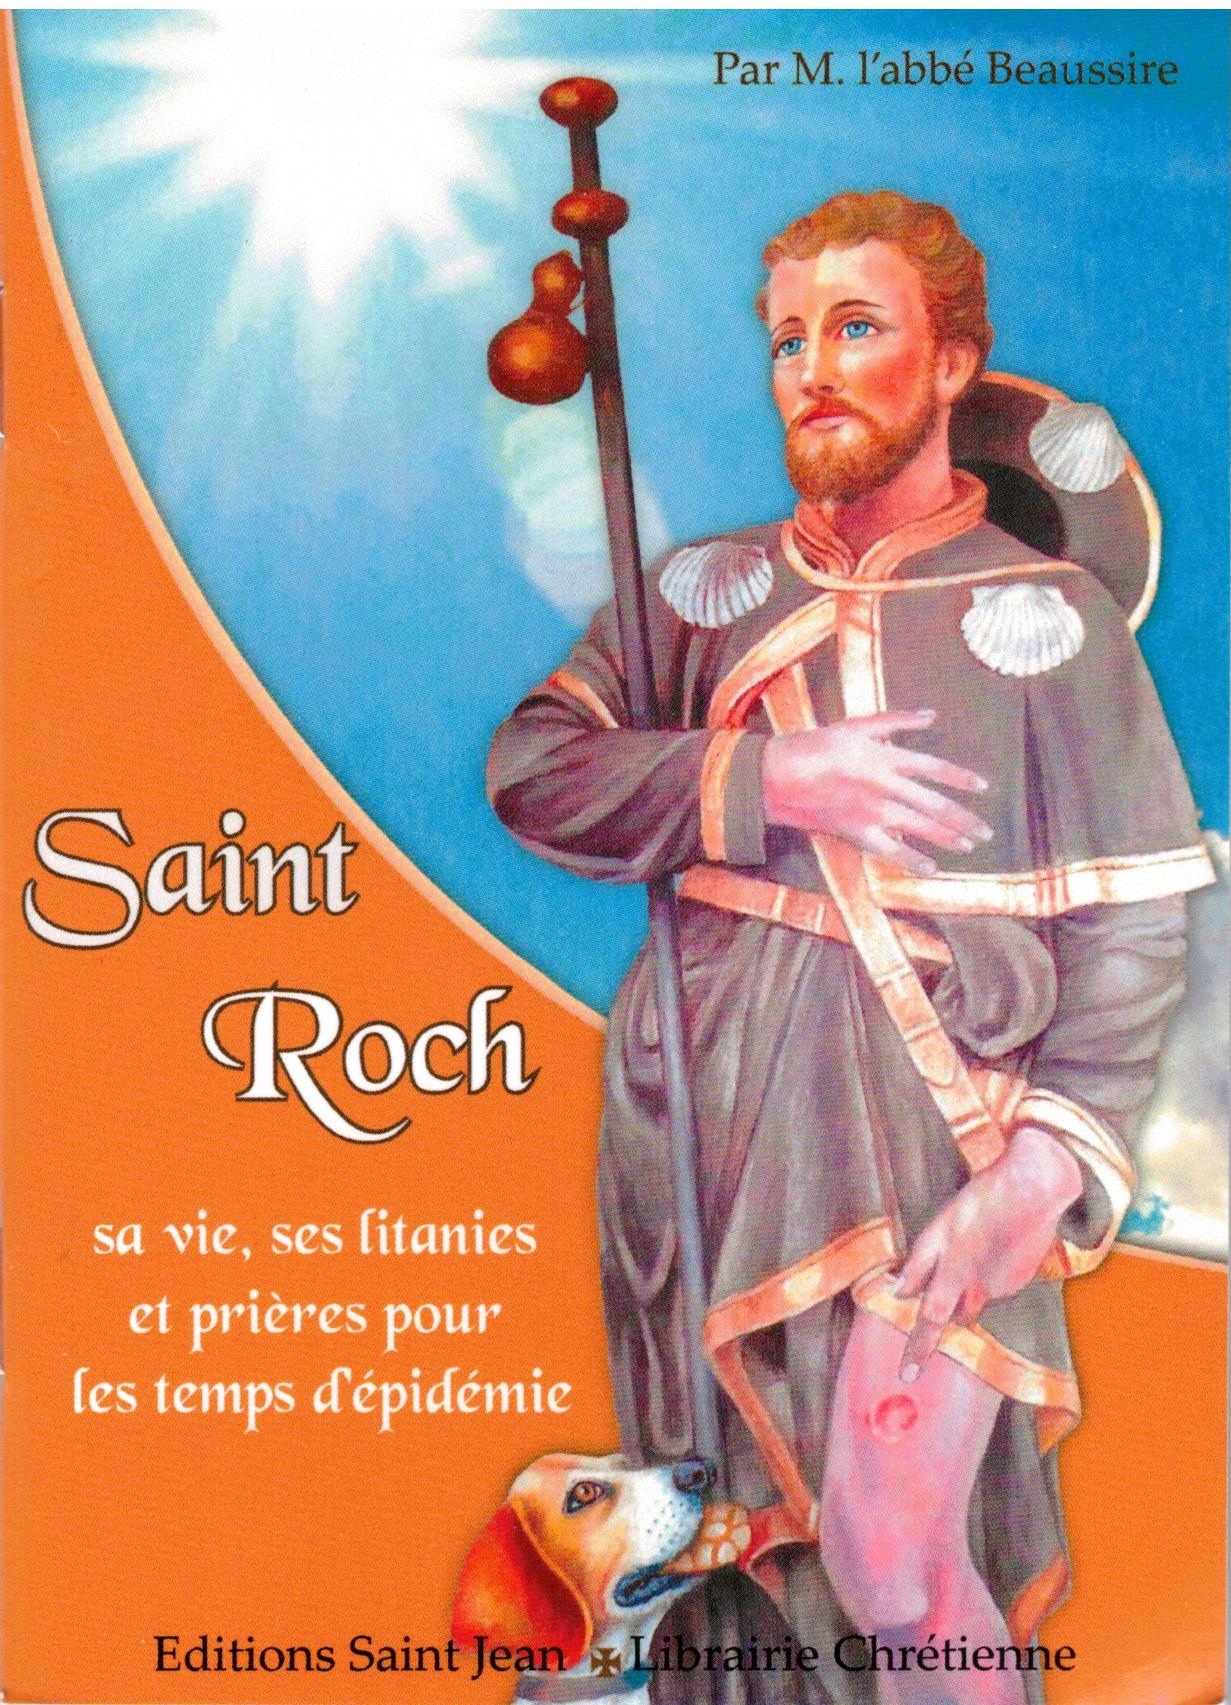 Saint Roch (1)